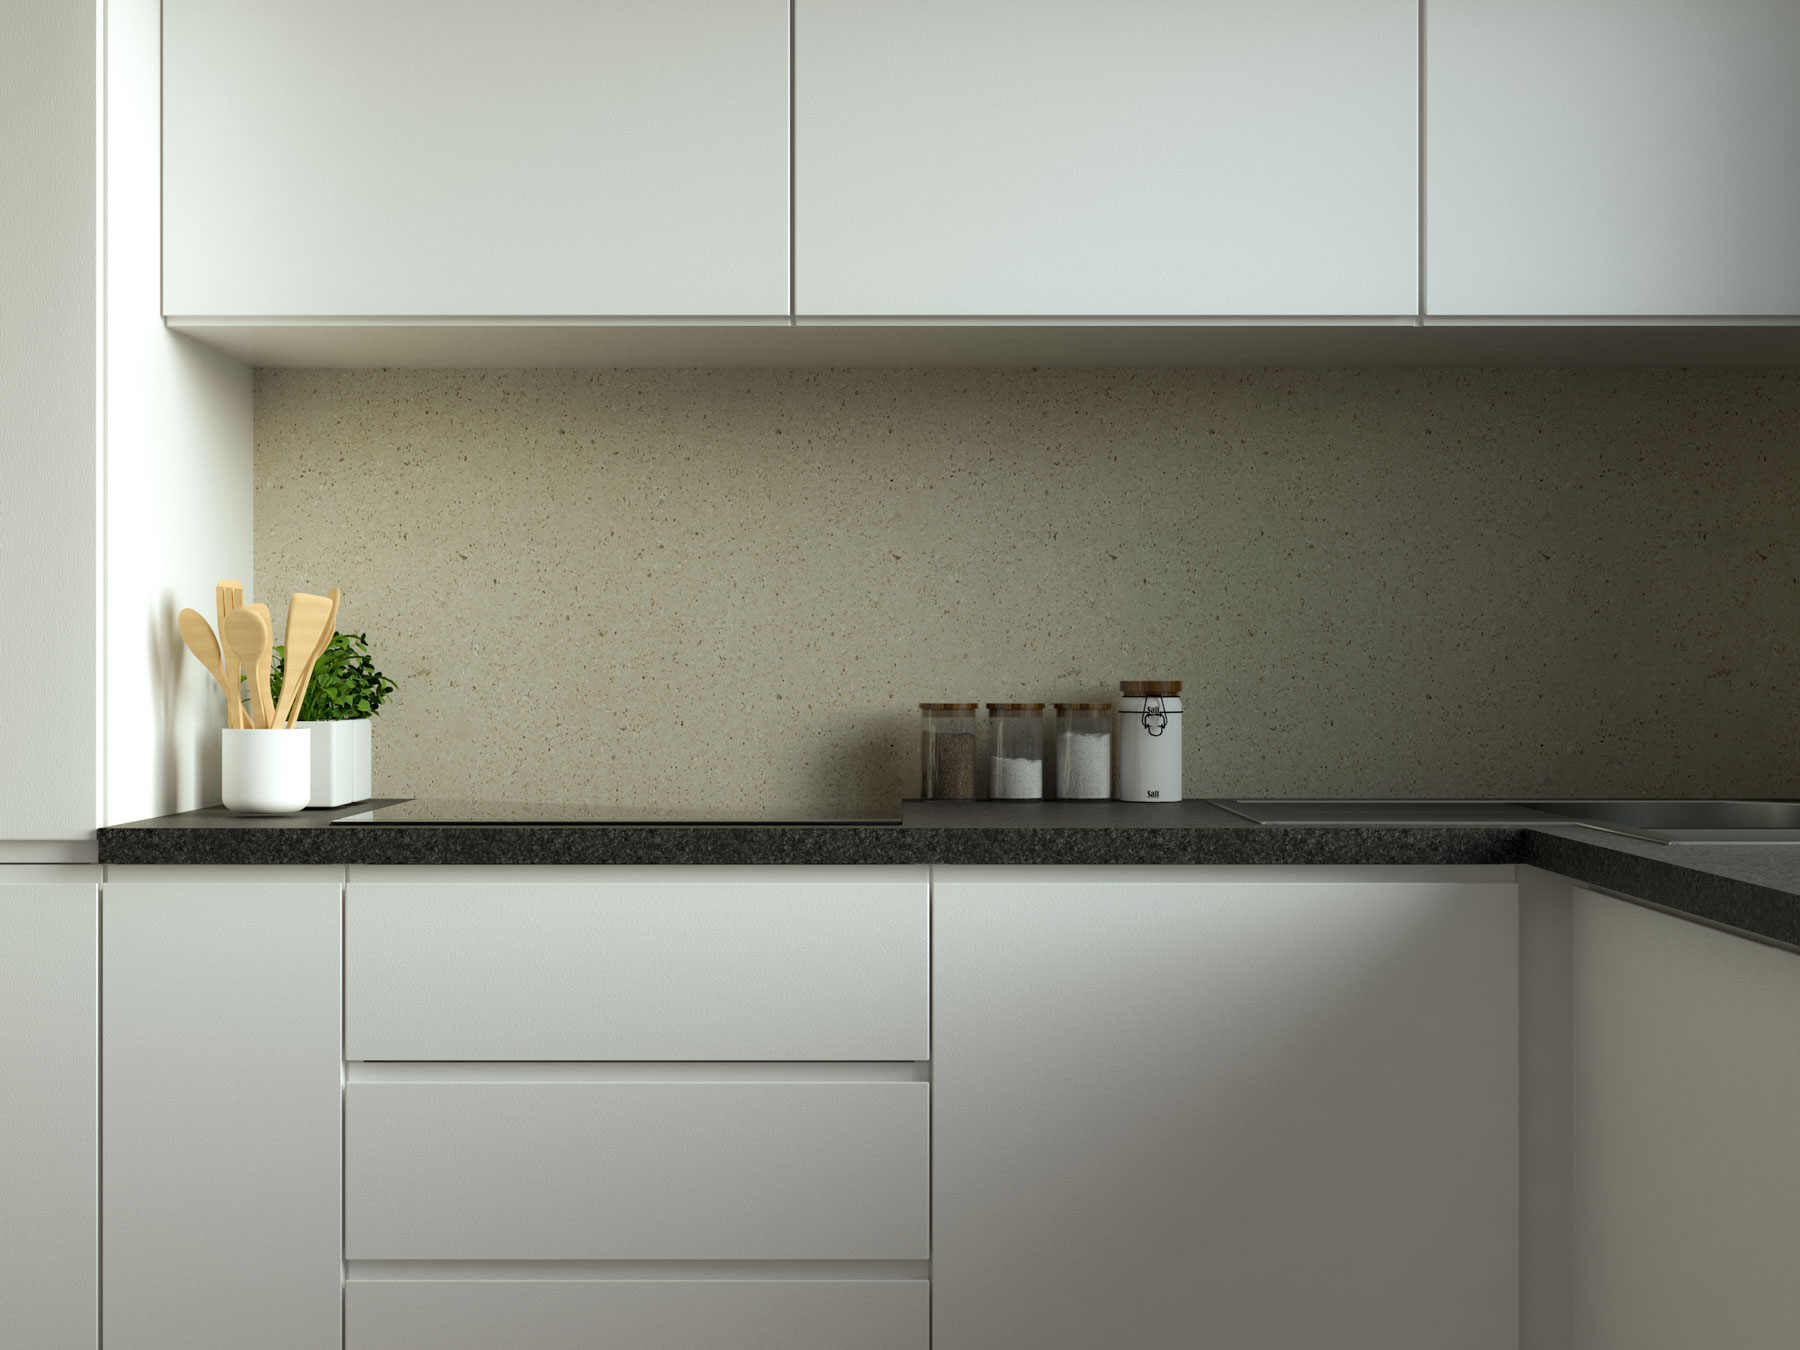 Kitchen With White Cabinets Black Granite Countertops And Cream Stone Backsplash 